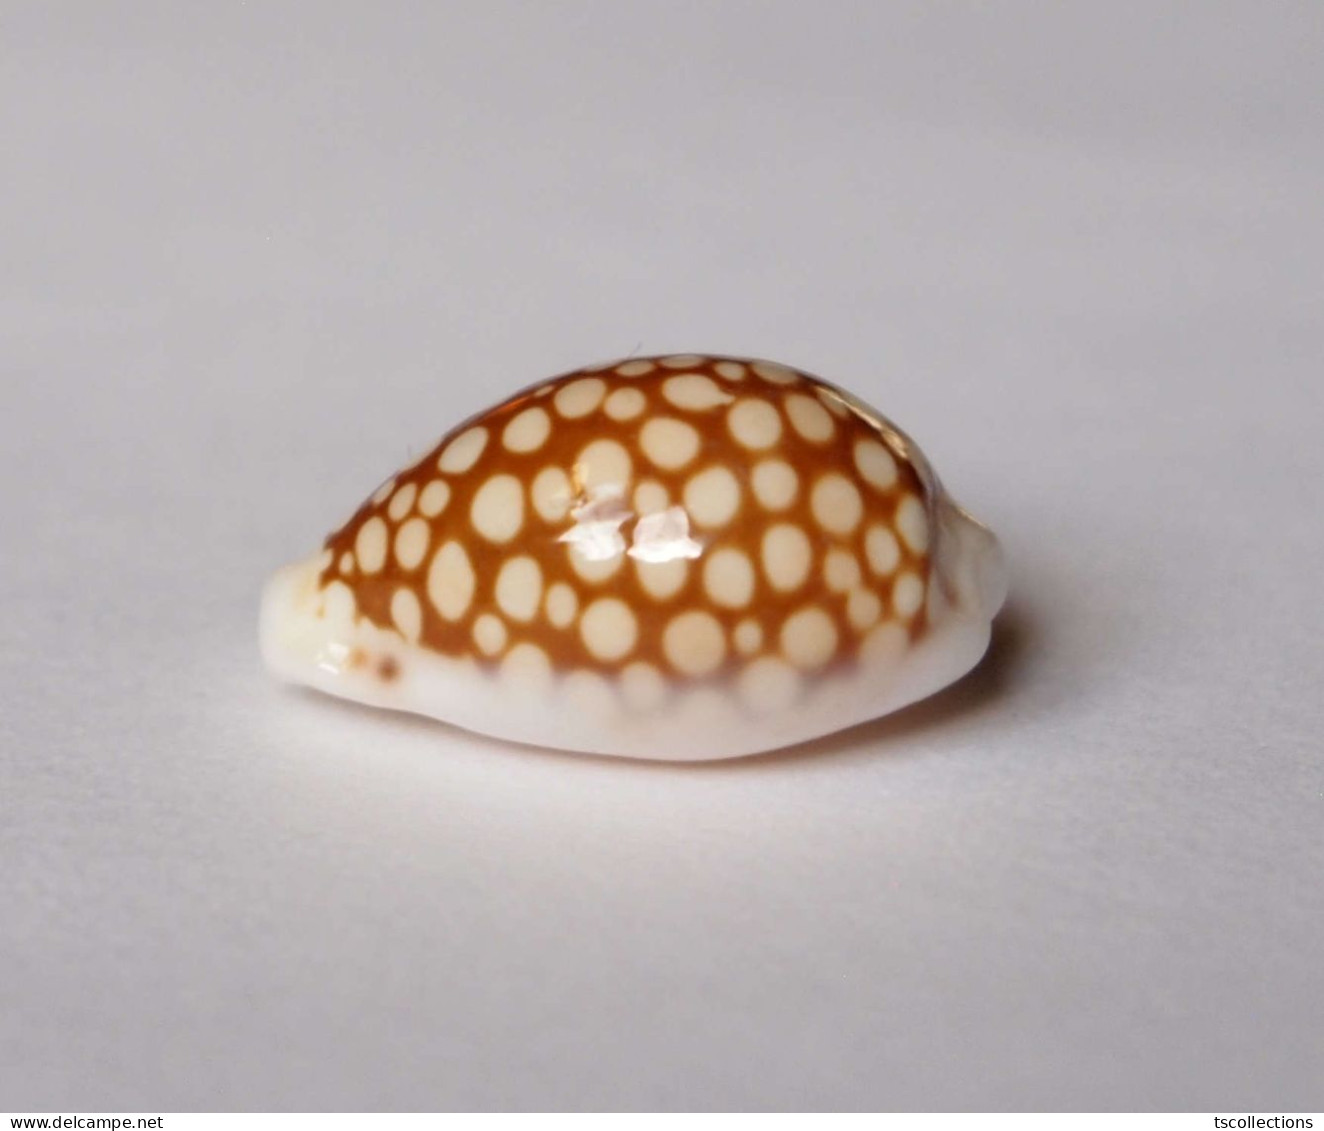 Cypraea Comma Toliarensis - Seashells & Snail-shells